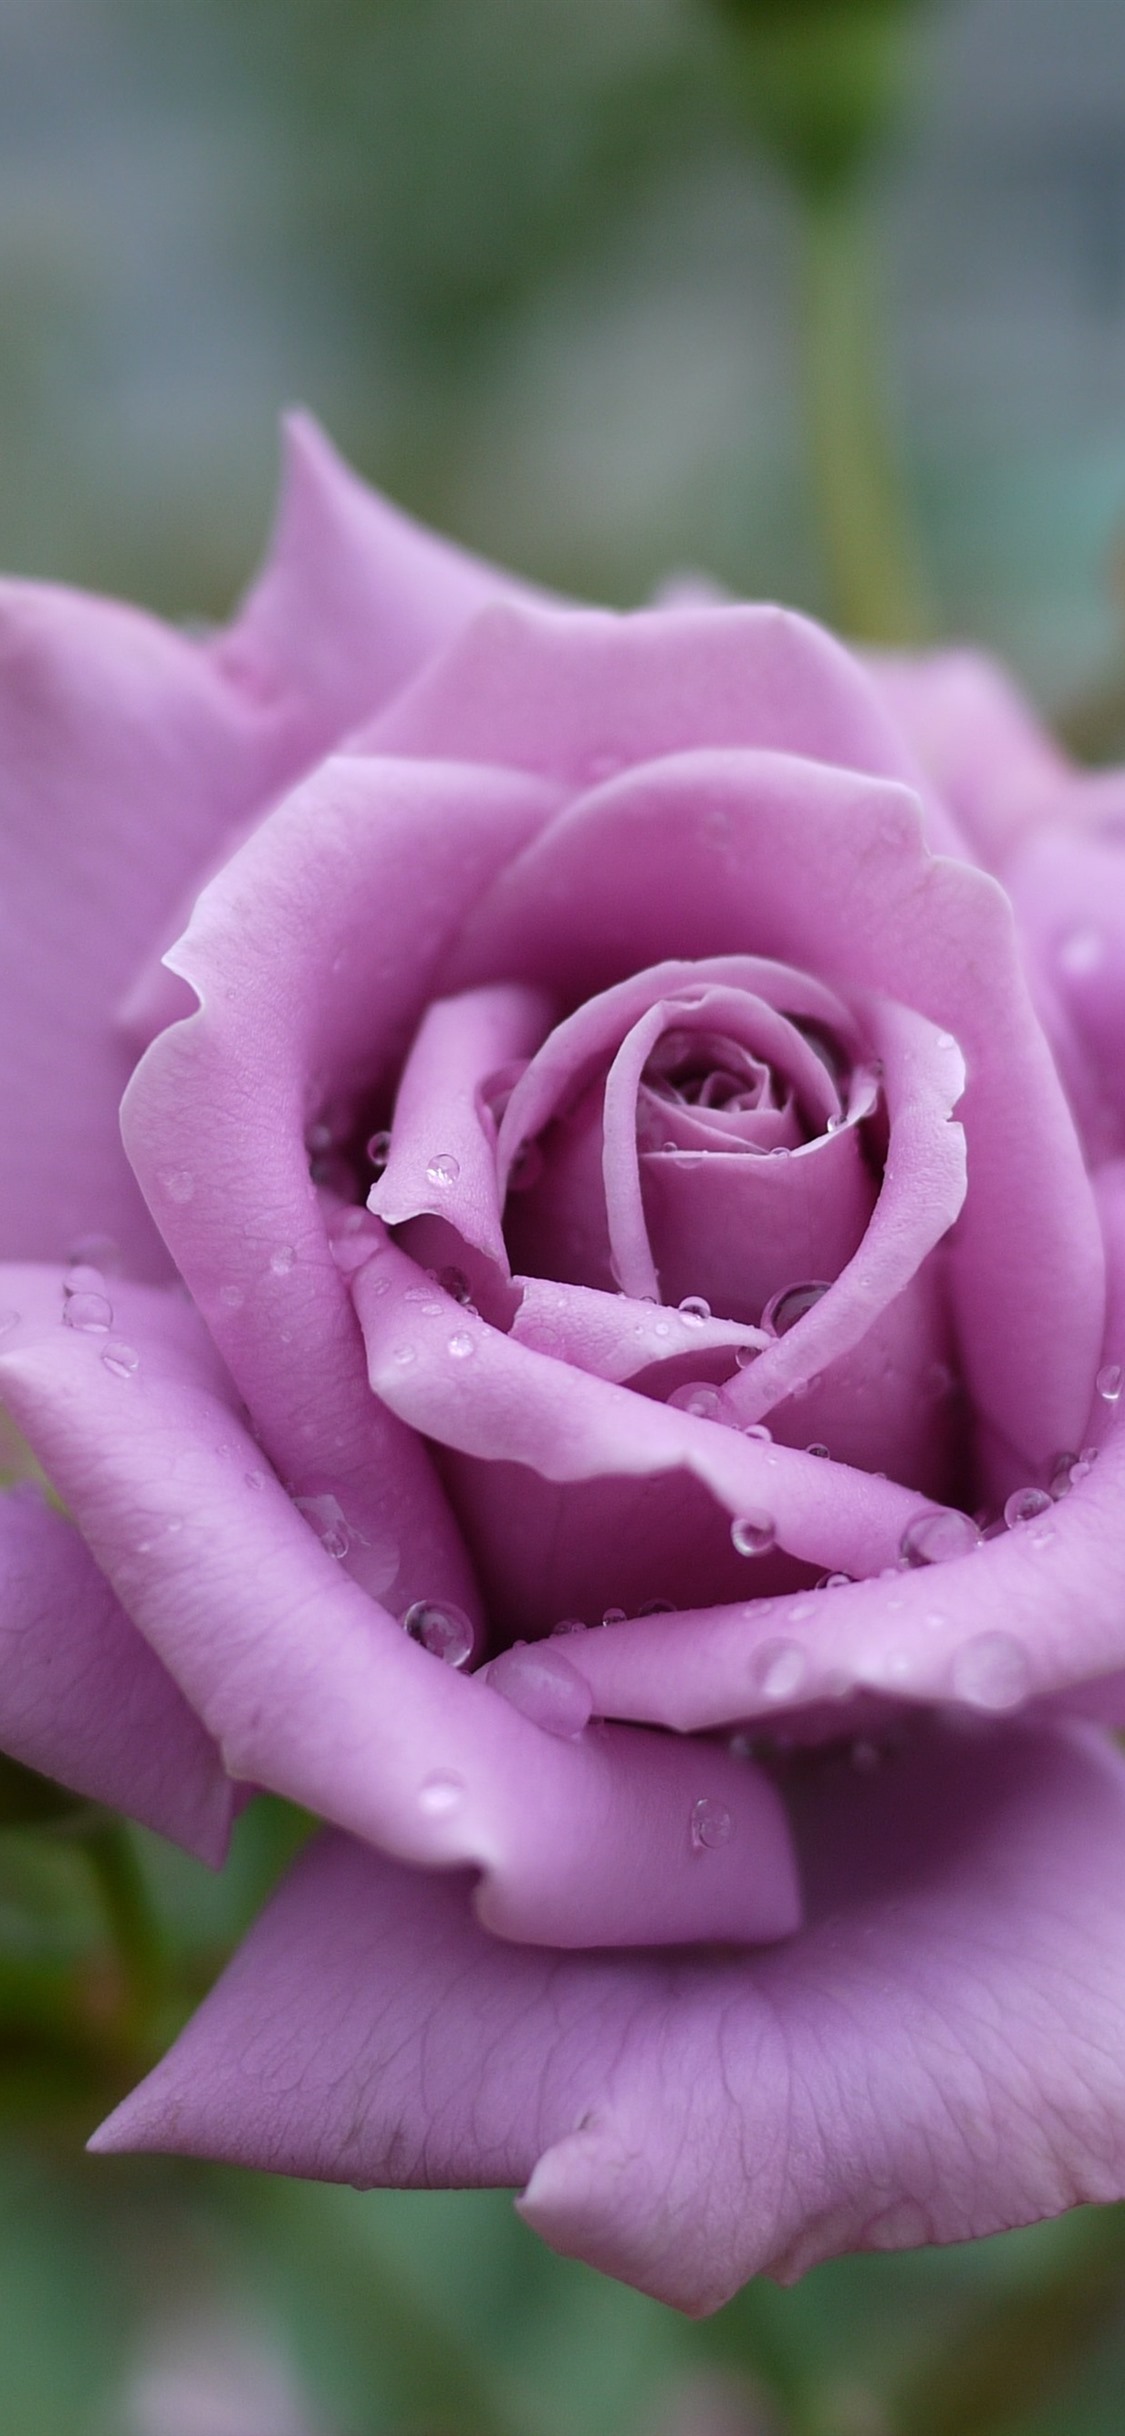 Light Purple Rose Petals Water Droplets iPhone Pro